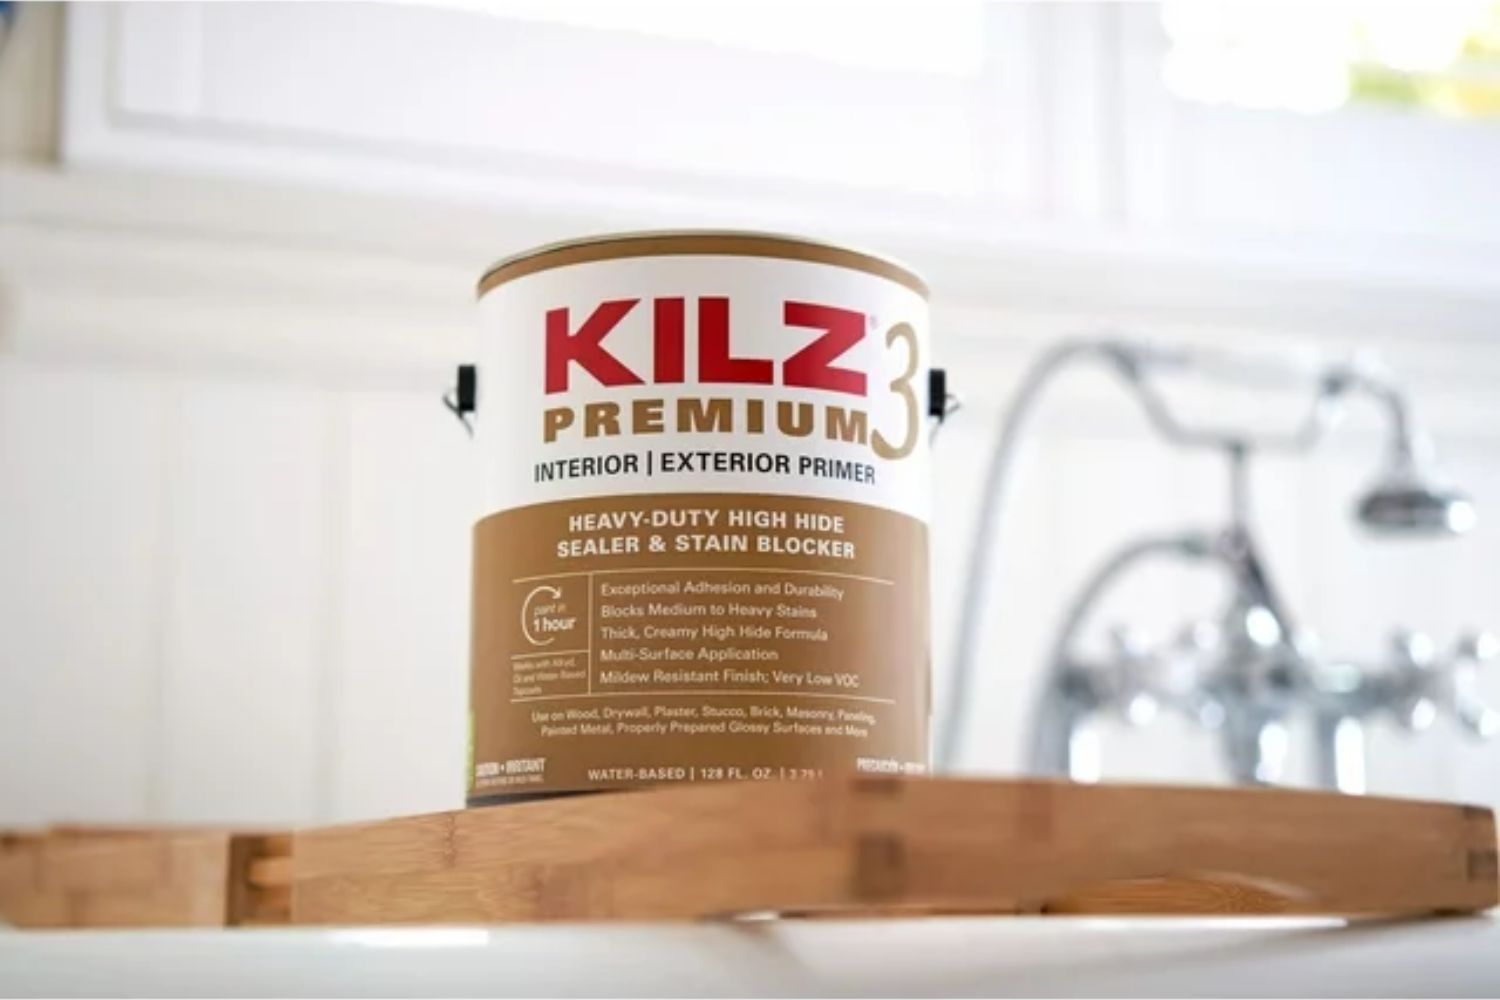 A gallon of Kilz 3 Premium Interior/Exterior Primer garage paint on a counter.